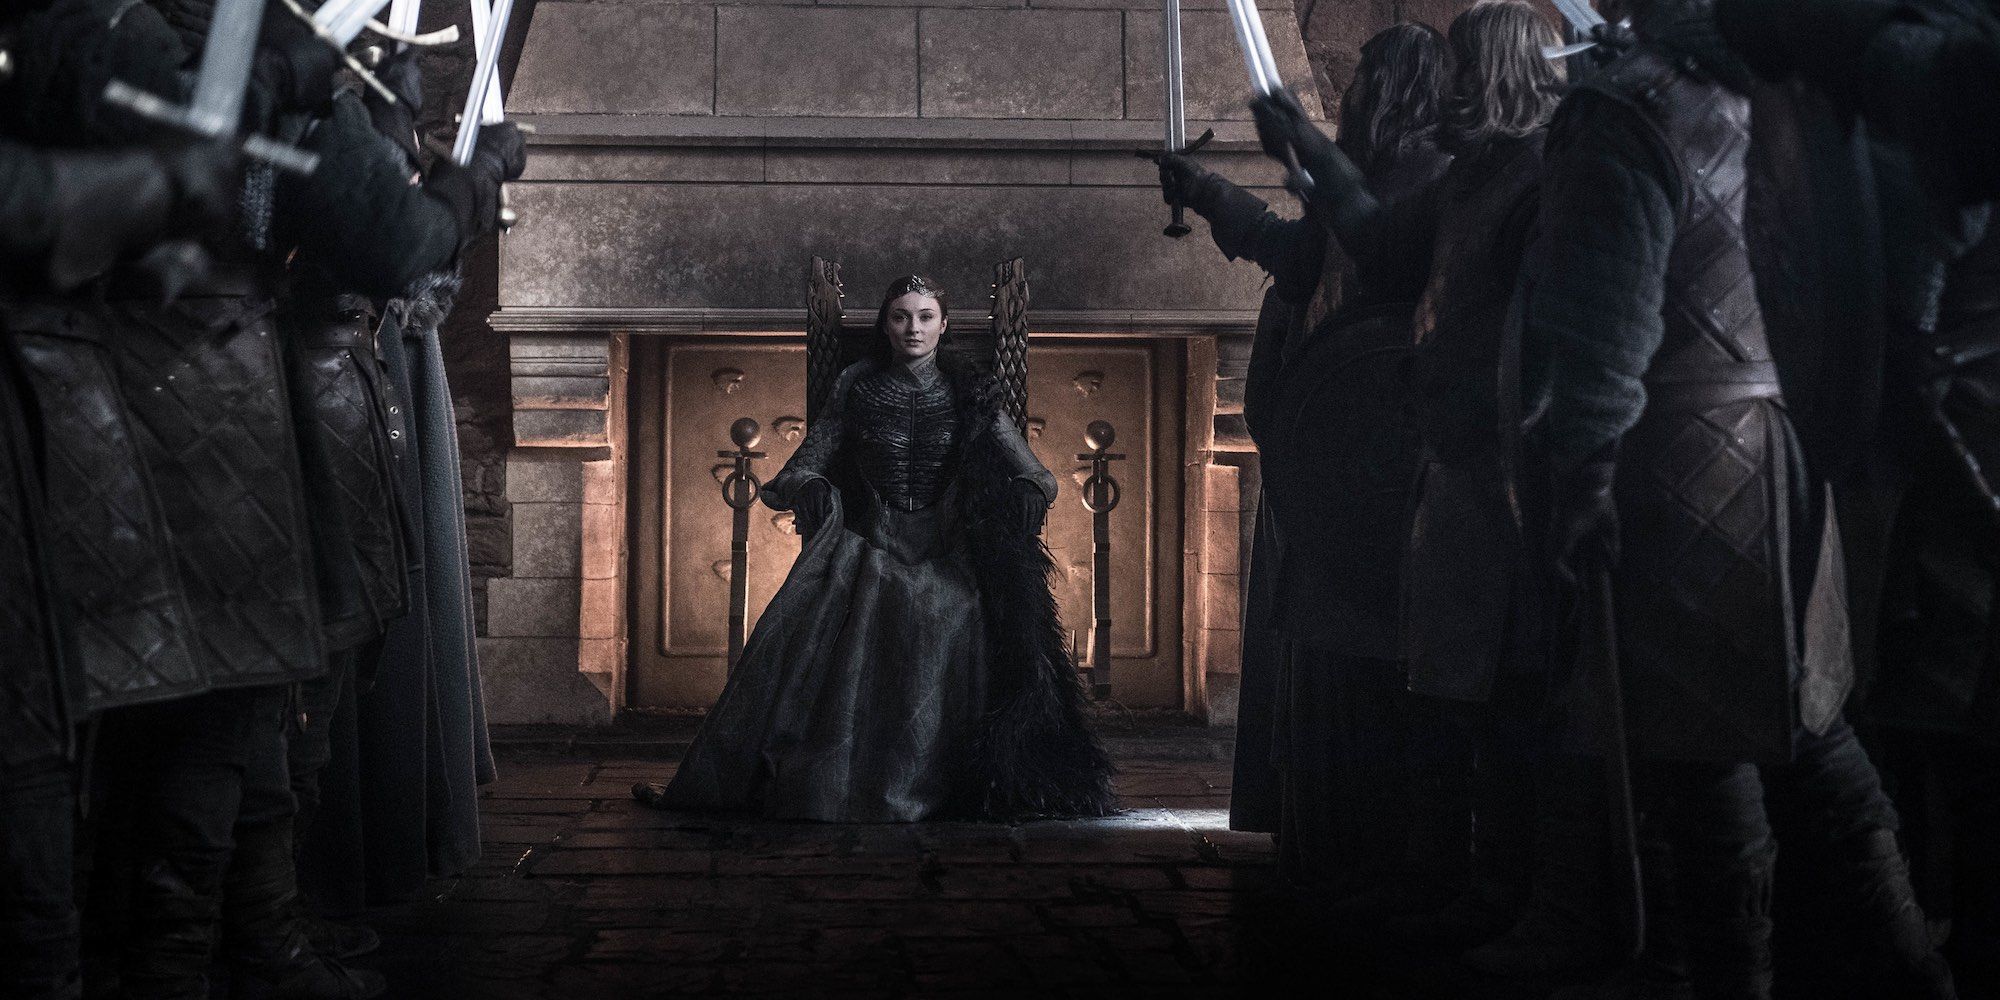 Game of Thrones finale where Sansa Stark is deemed Queen of Winterfell